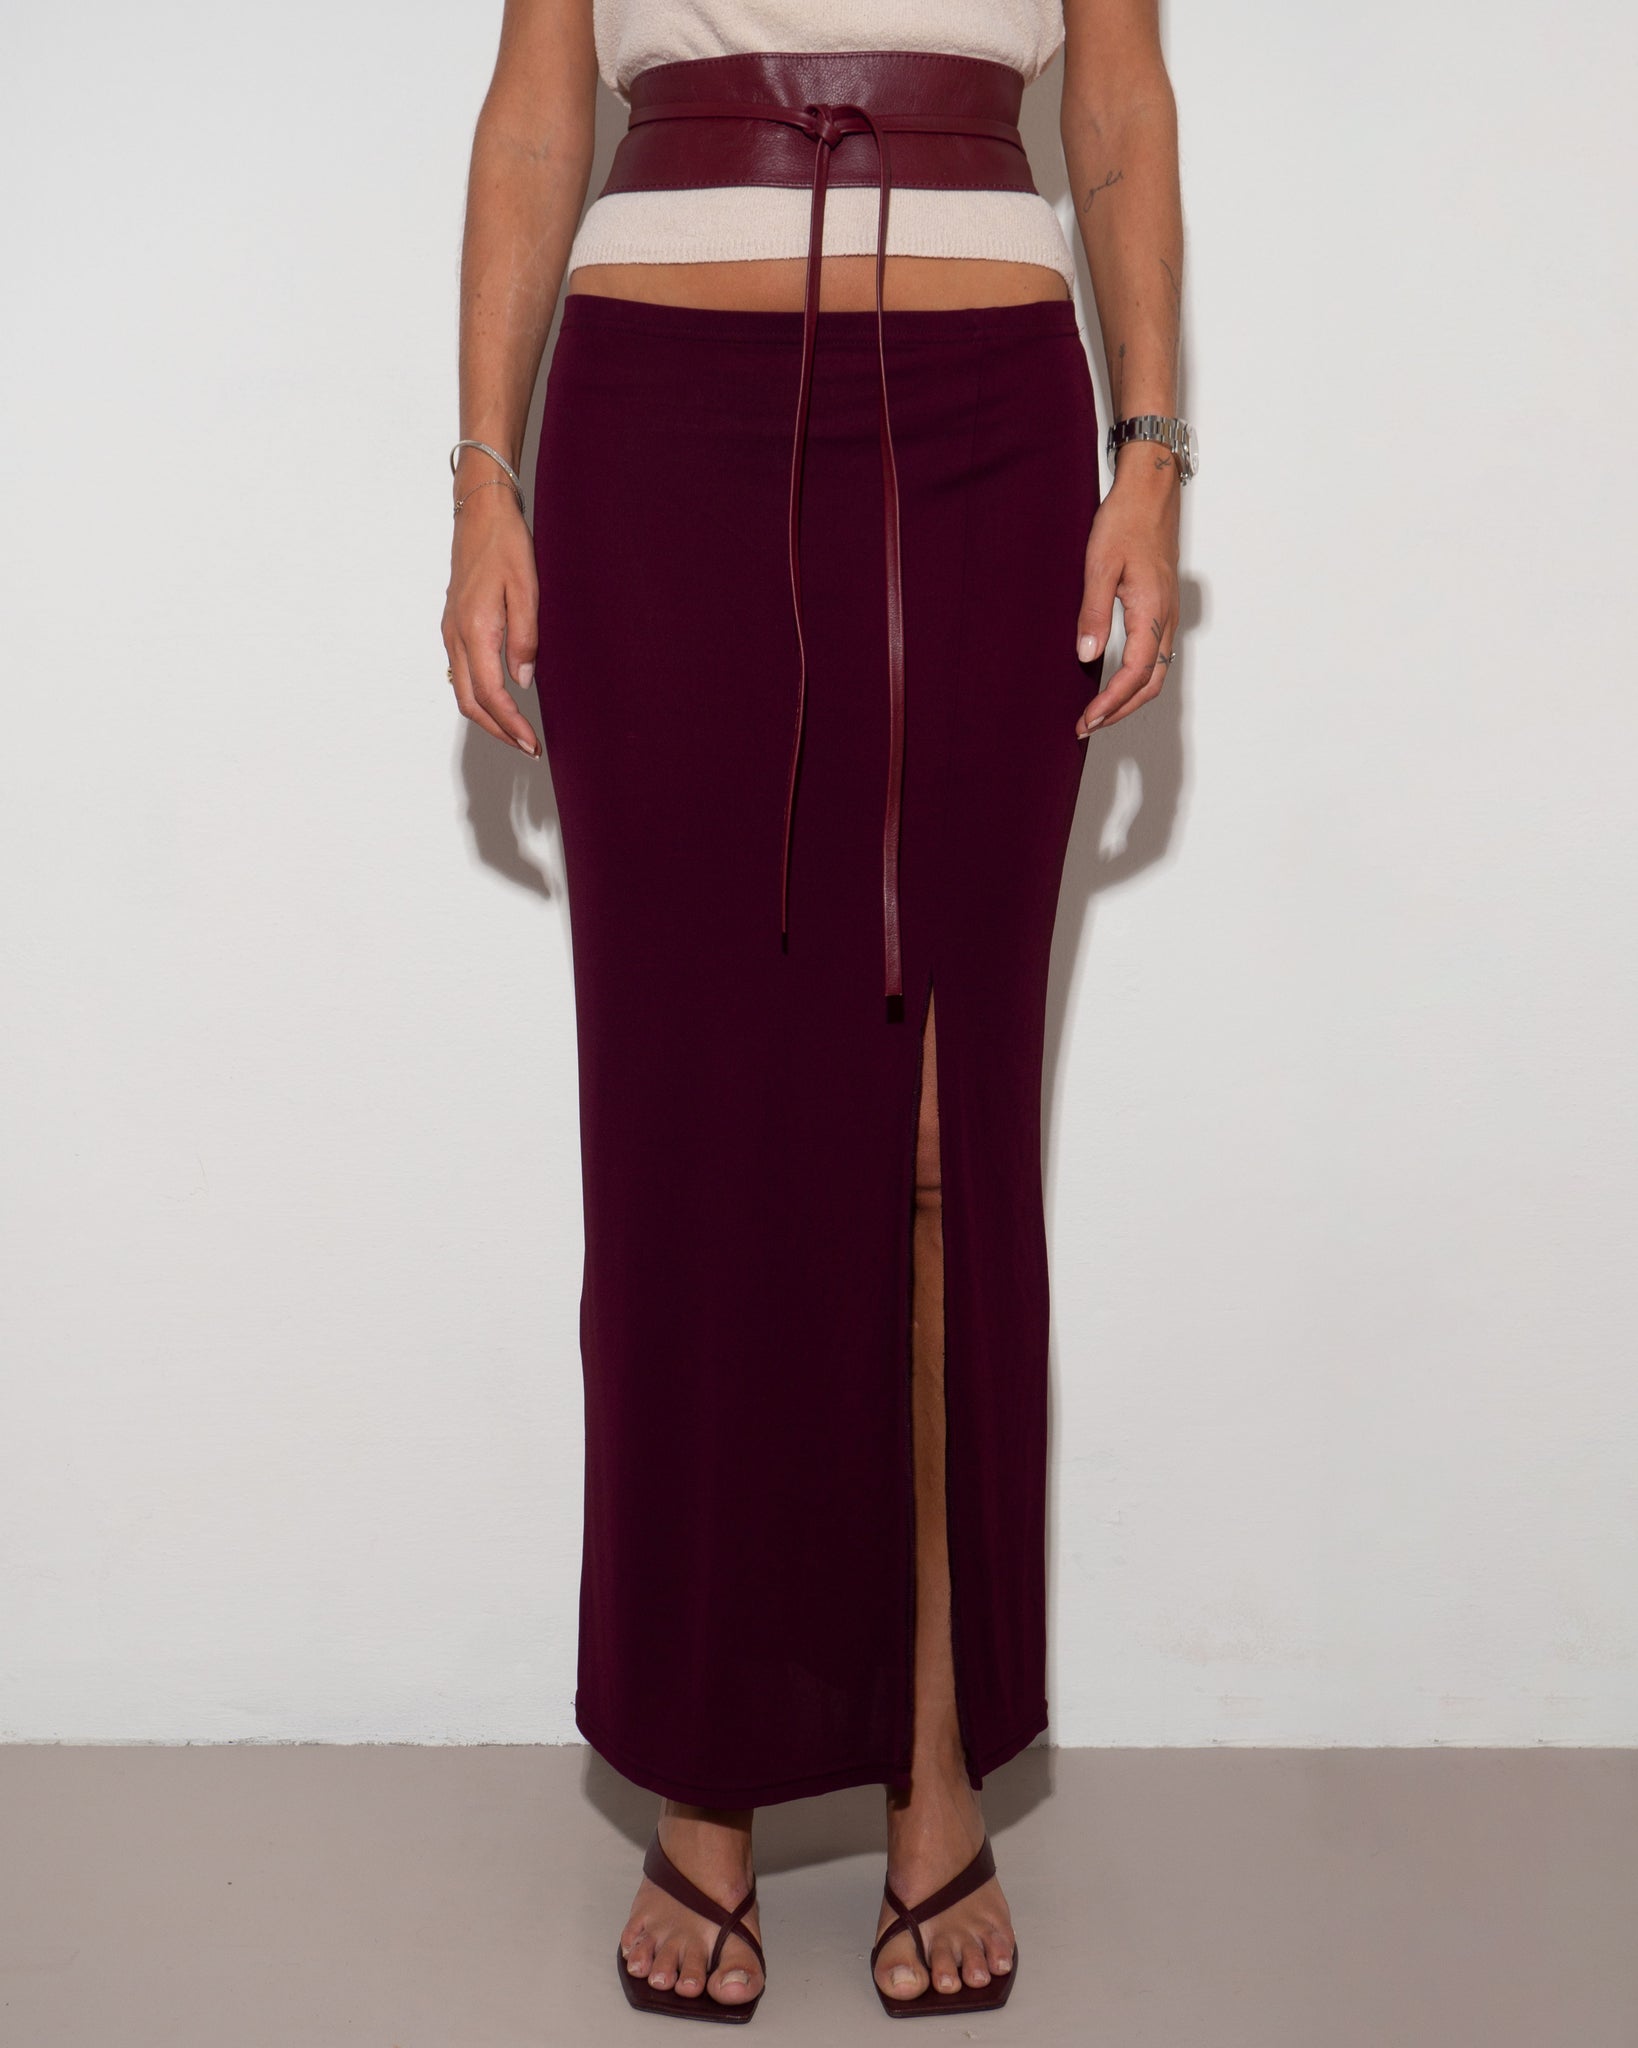 Burgundy Slit Skirt